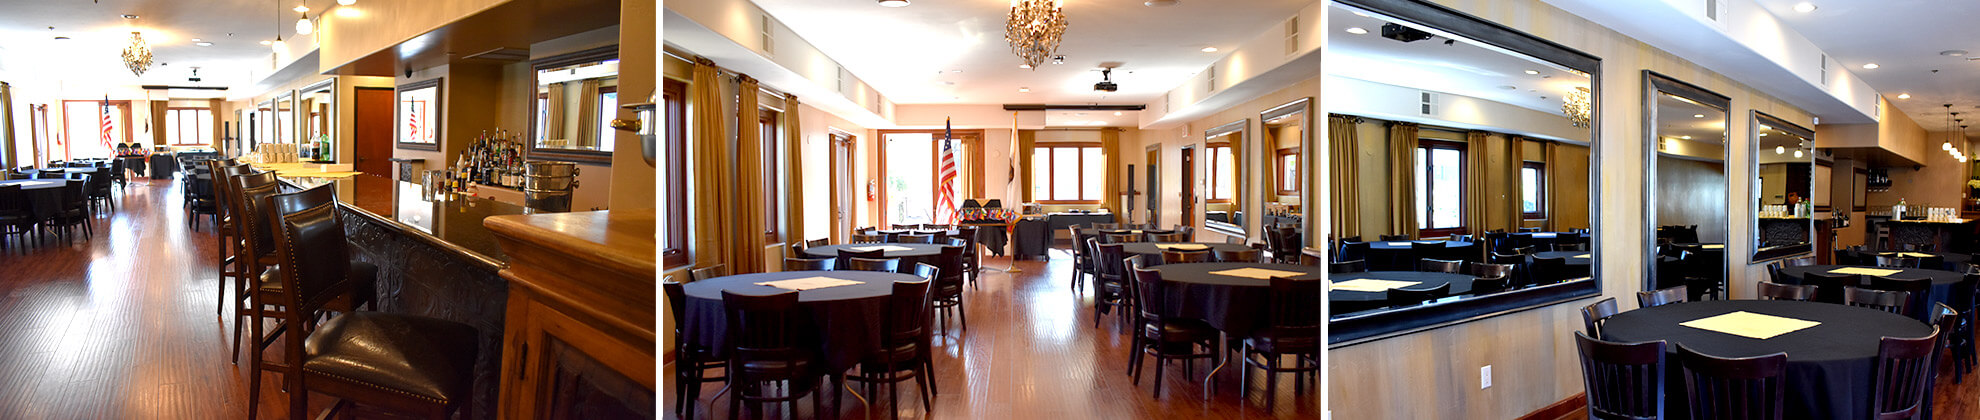 Avila Terrace Banquet Room Downtown Riverside - Catering